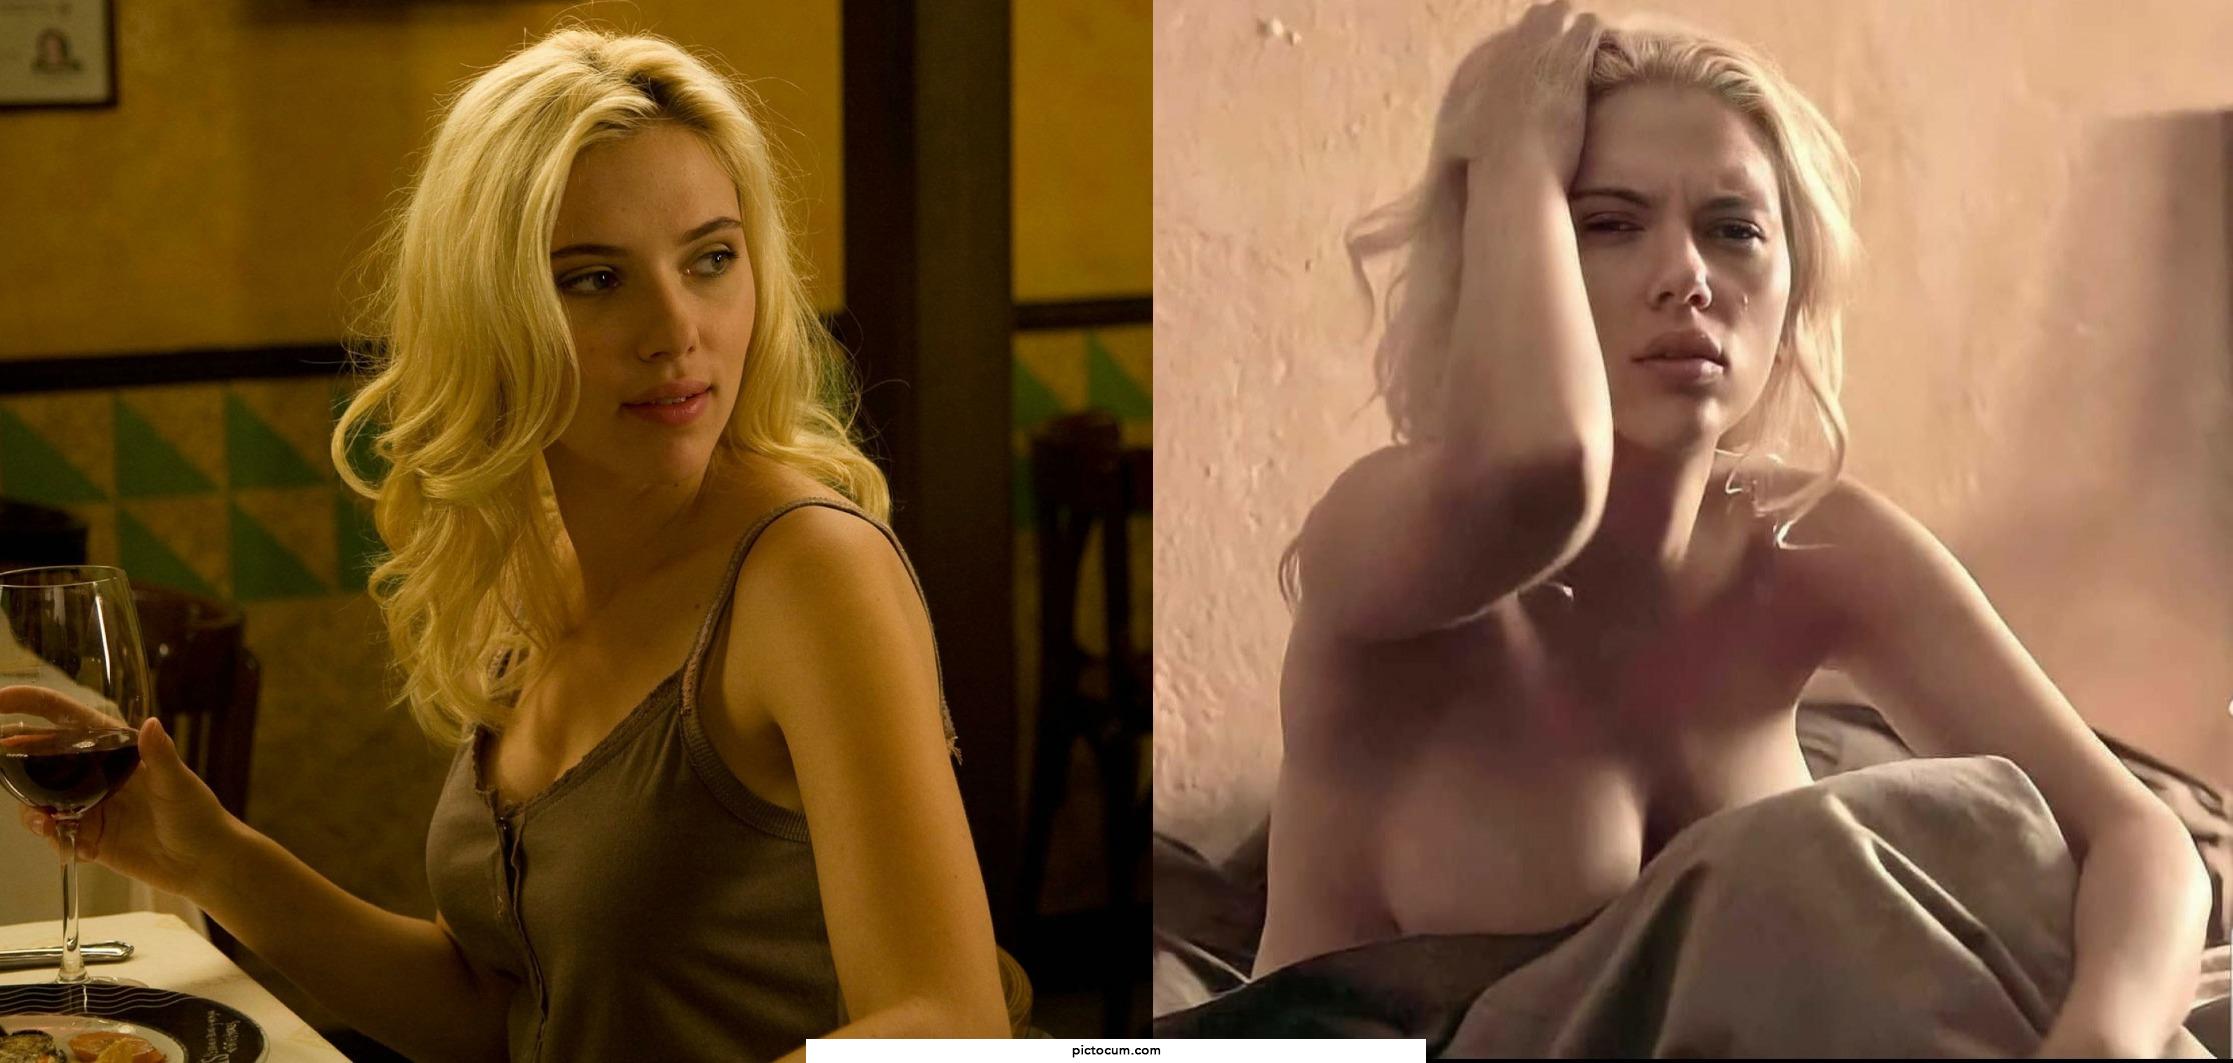 Scarlett Johansson at her absolute peak